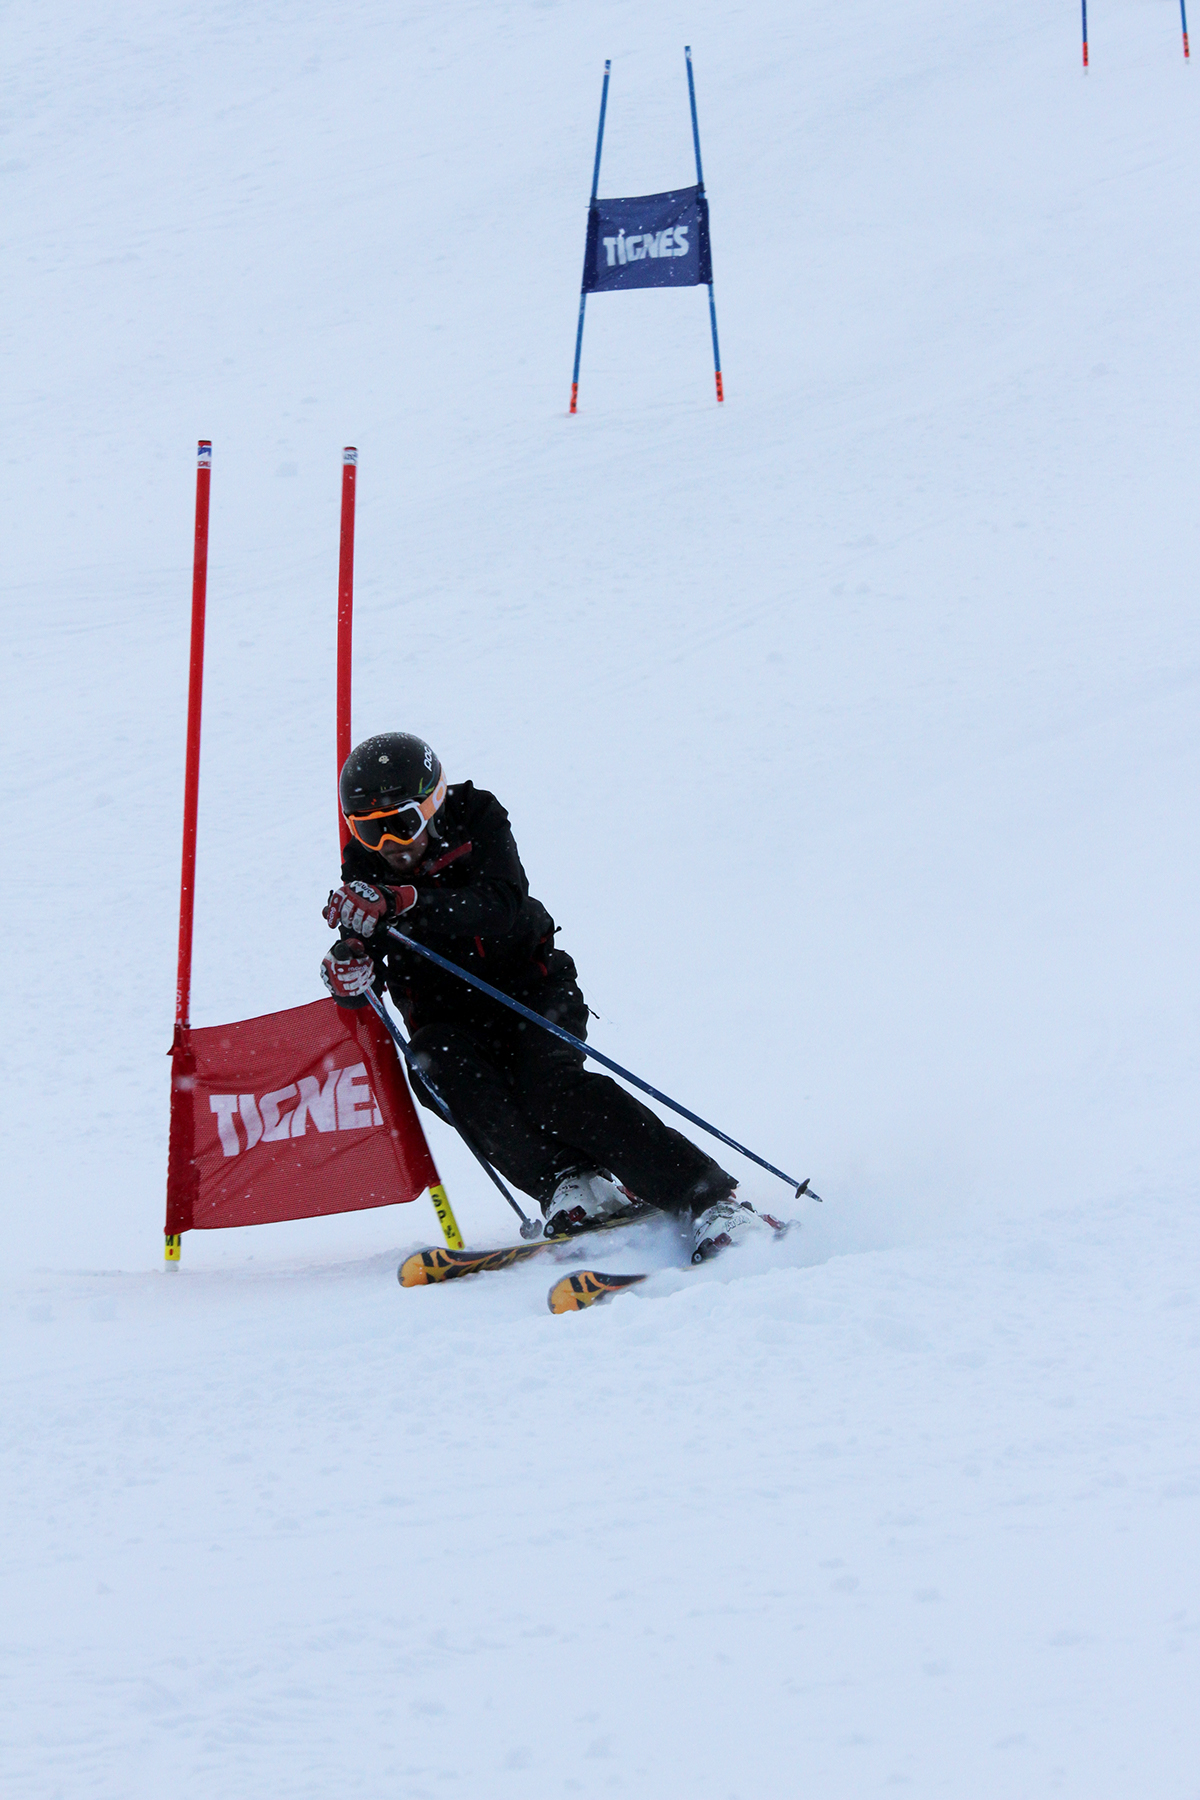 Adobe Portfolio Snowboarding skiing sheffield University hallam varsity canon eos 7D Sigma 70-200mm 24-105mm tignes